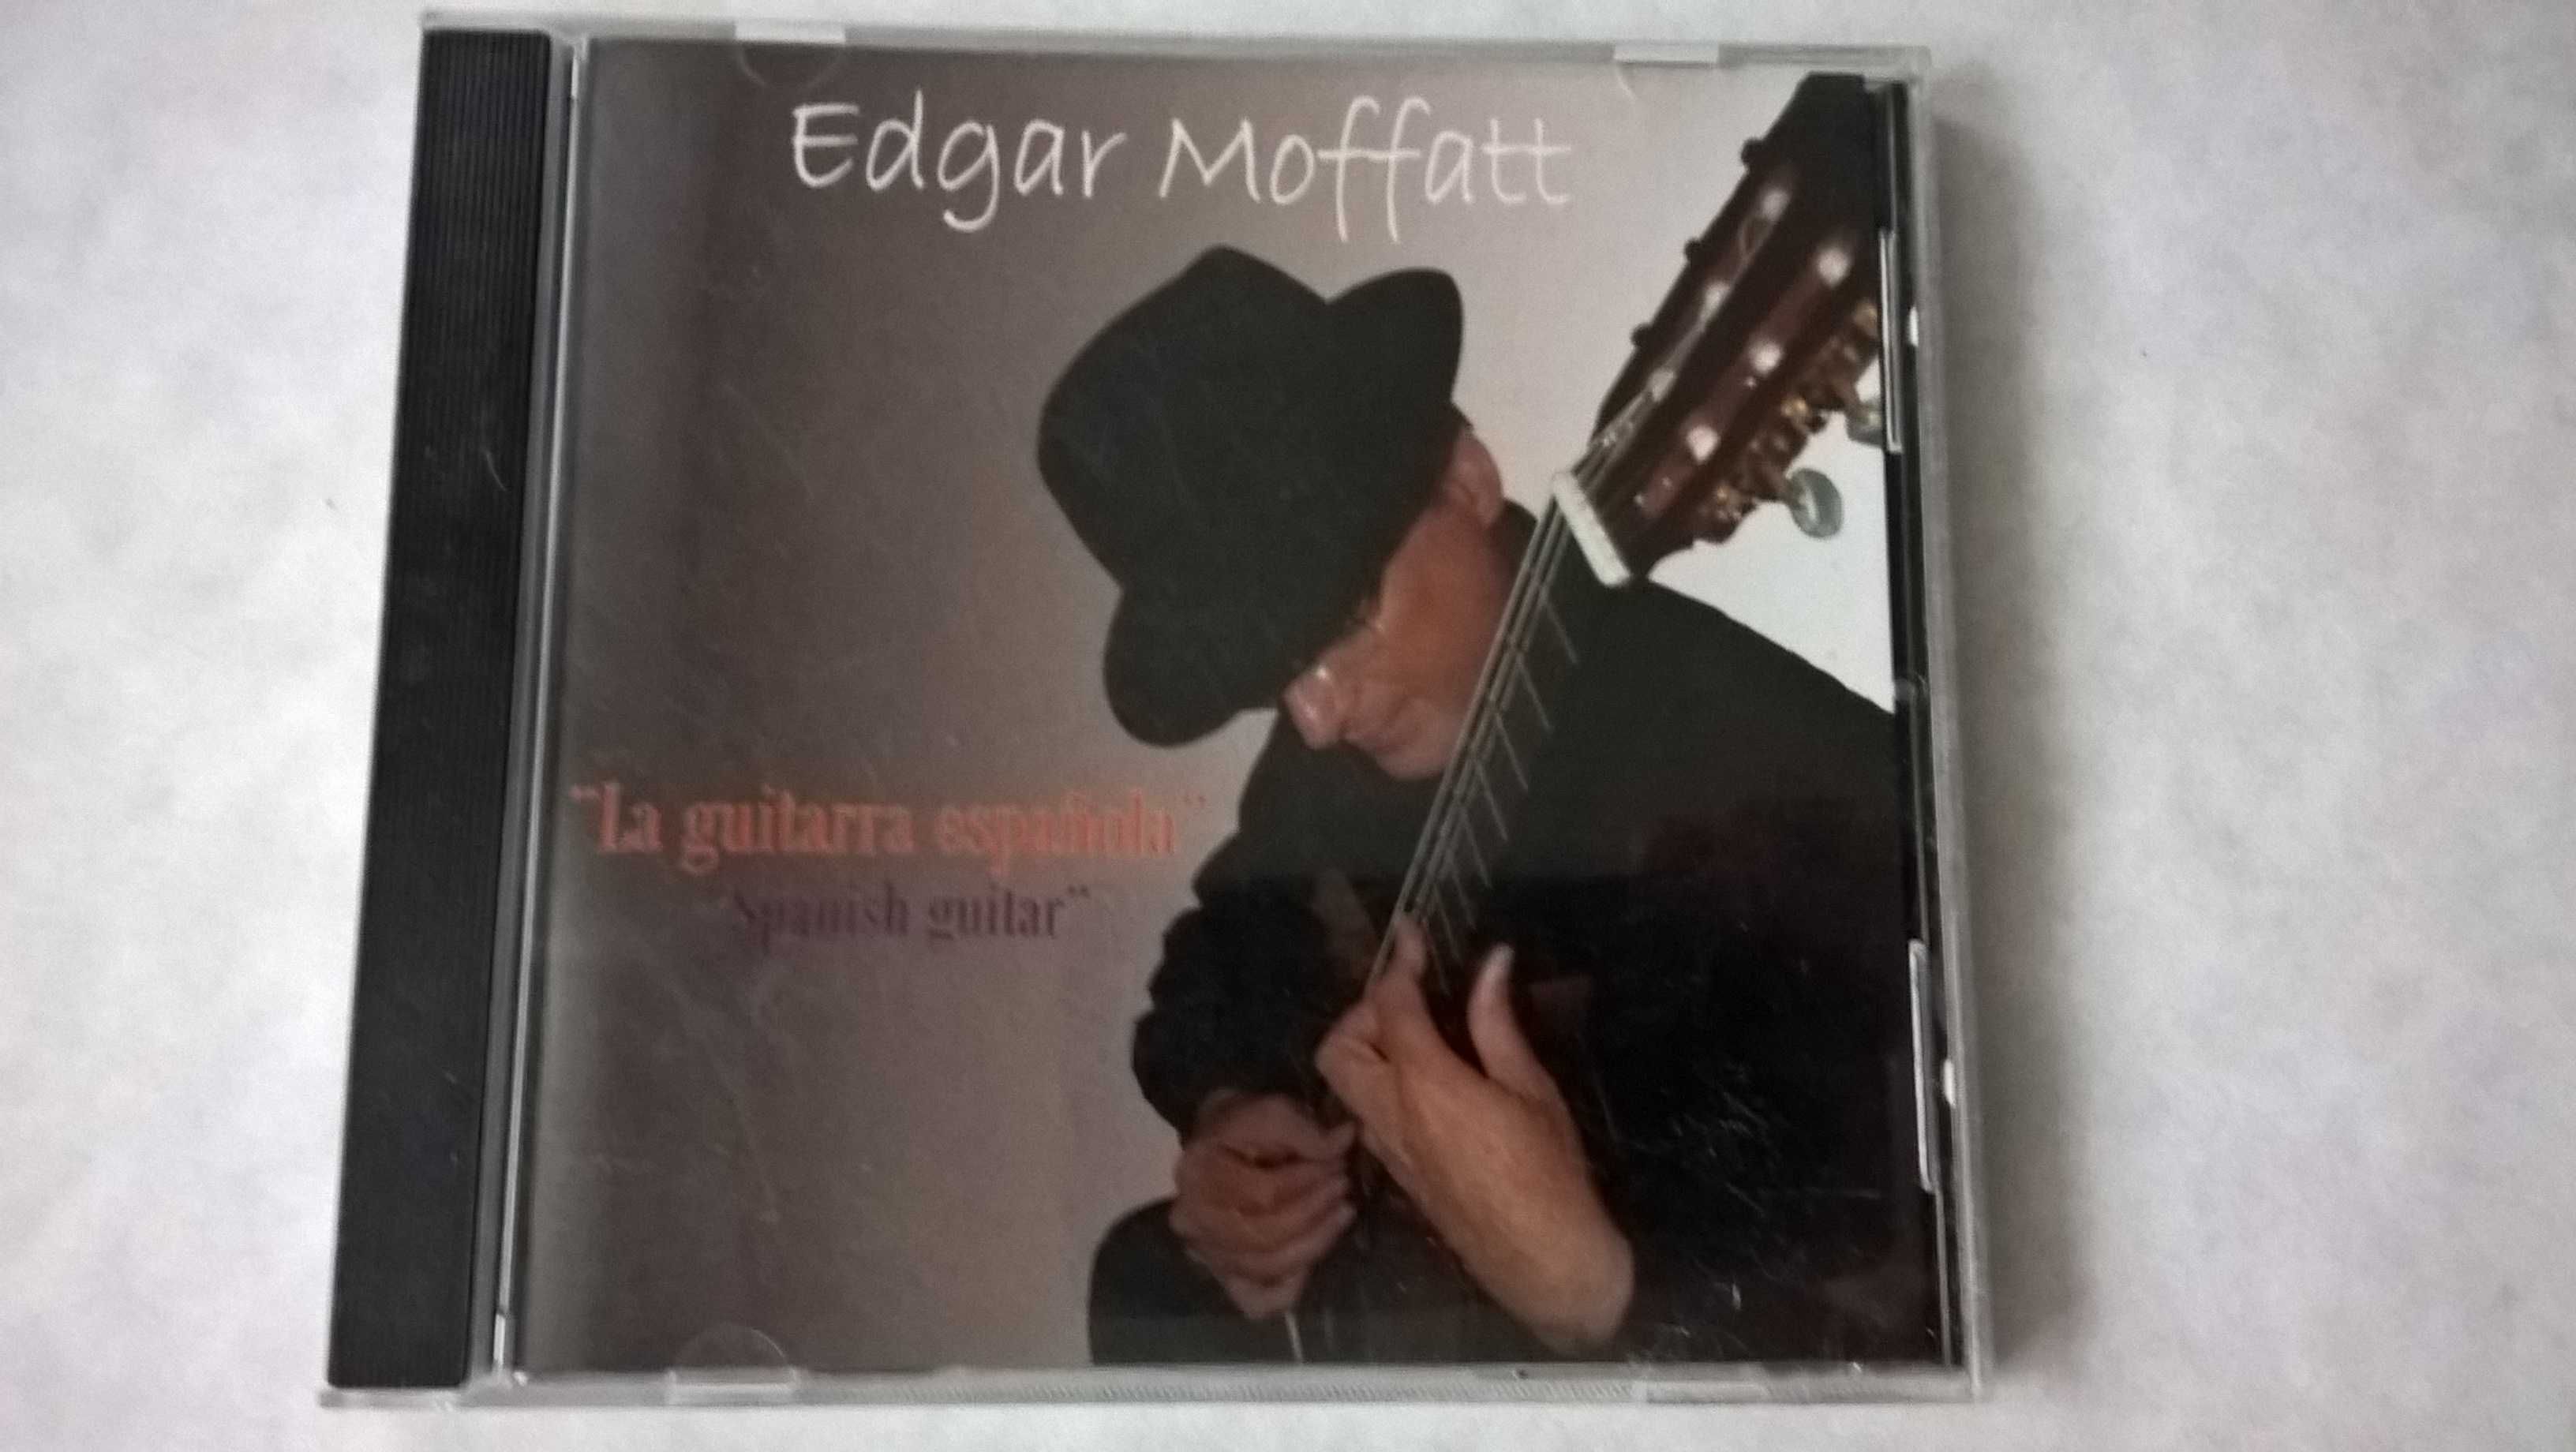 Płyta CD "La guitarra espanola - Spanish guitar" Edgar Moffatt